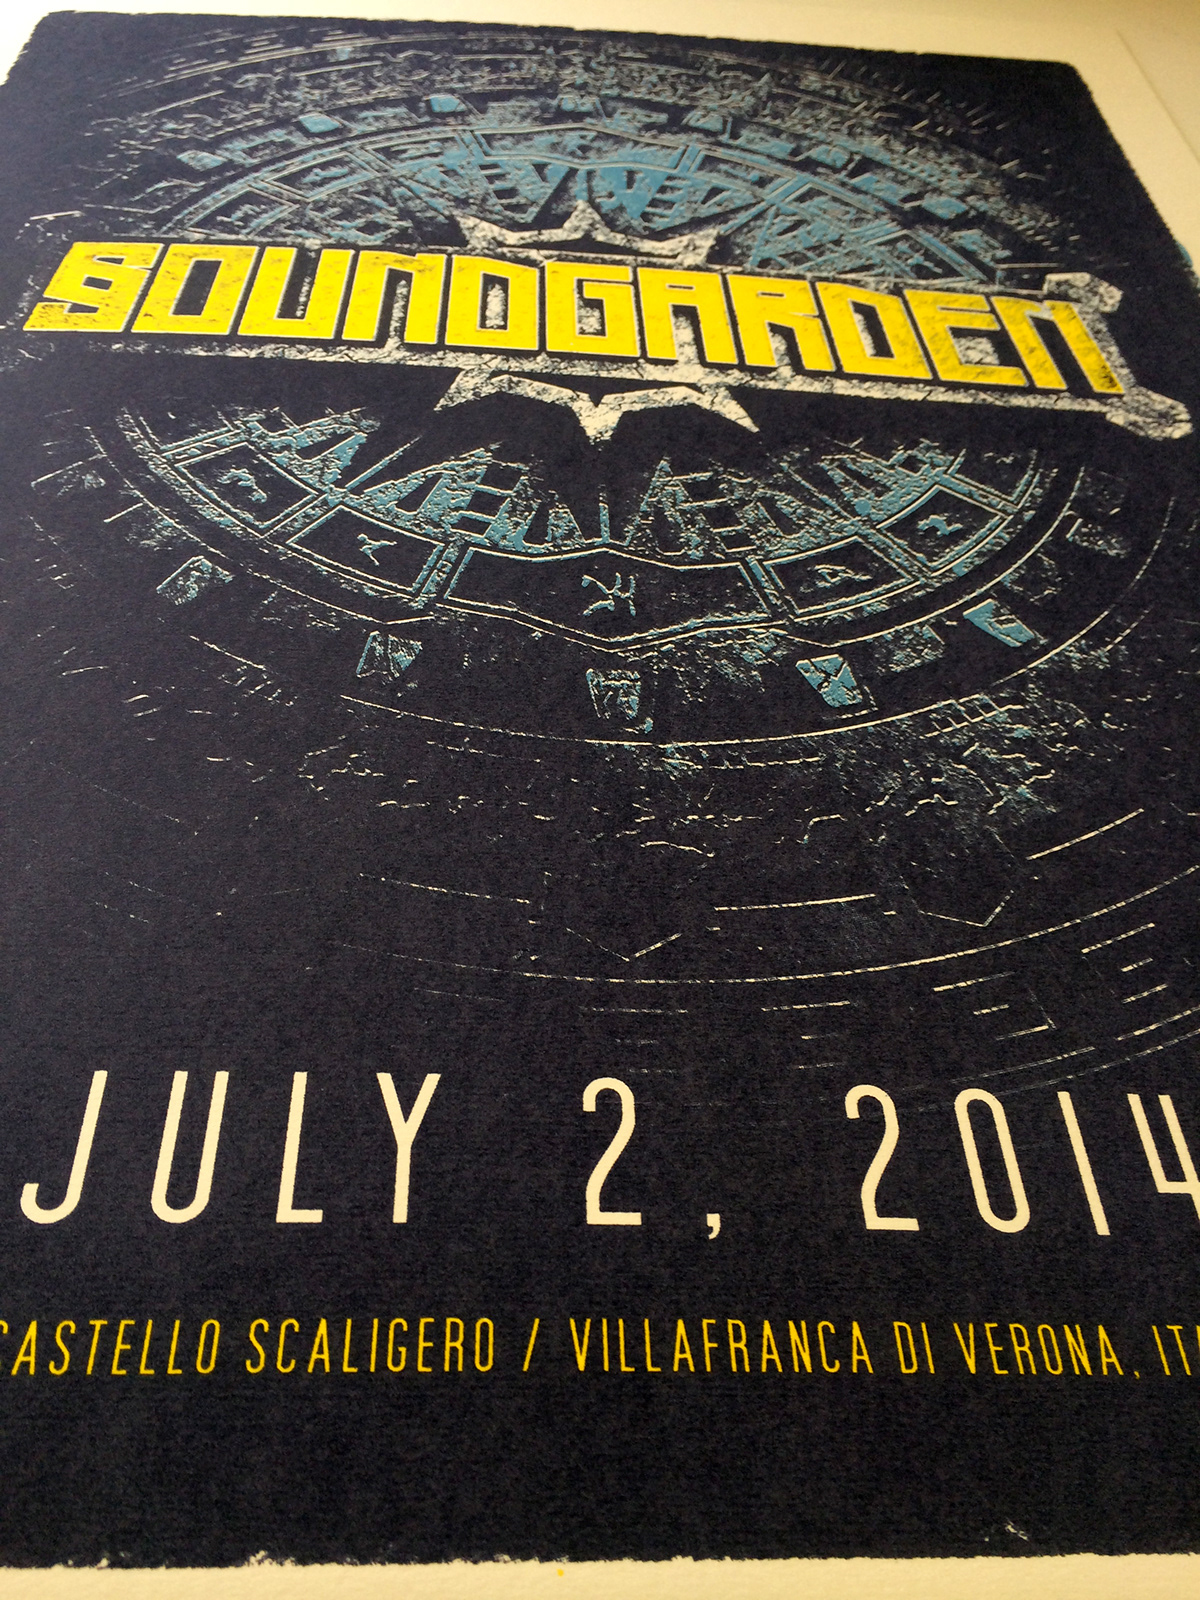 soundgarden VILLAFRANCA DI VERONA Castello Scaligero chris cornell gig poster screen print